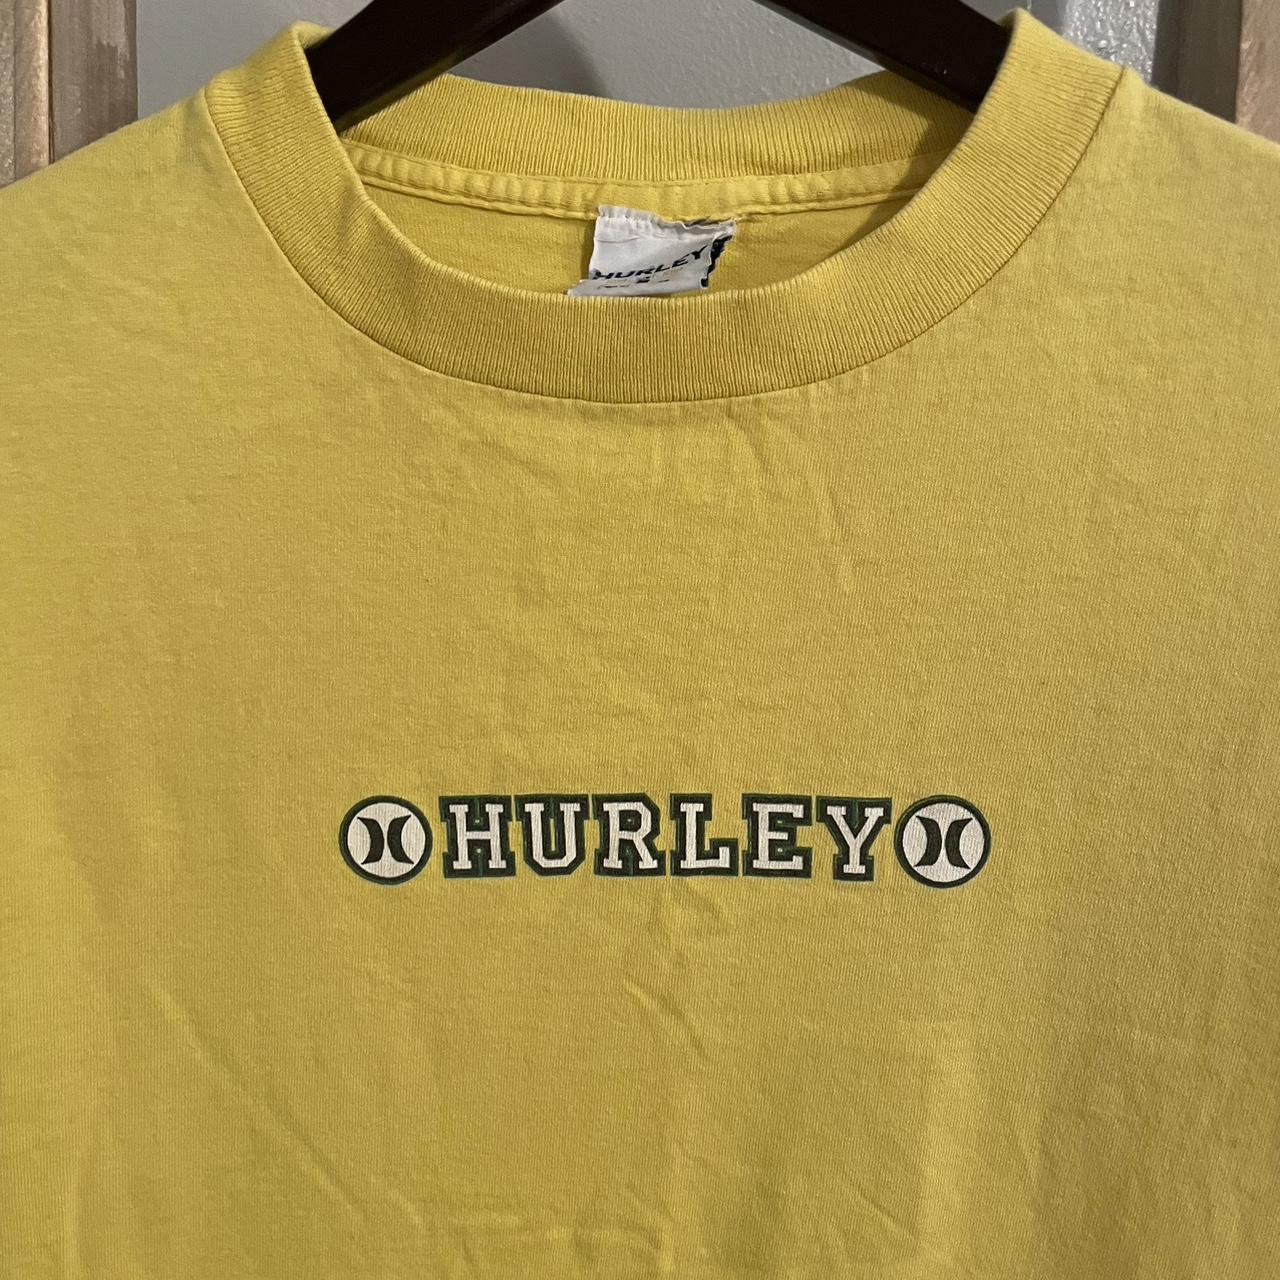 Vintage 1990’s Hurley yellow long sleeve t-shirt.... - Depop